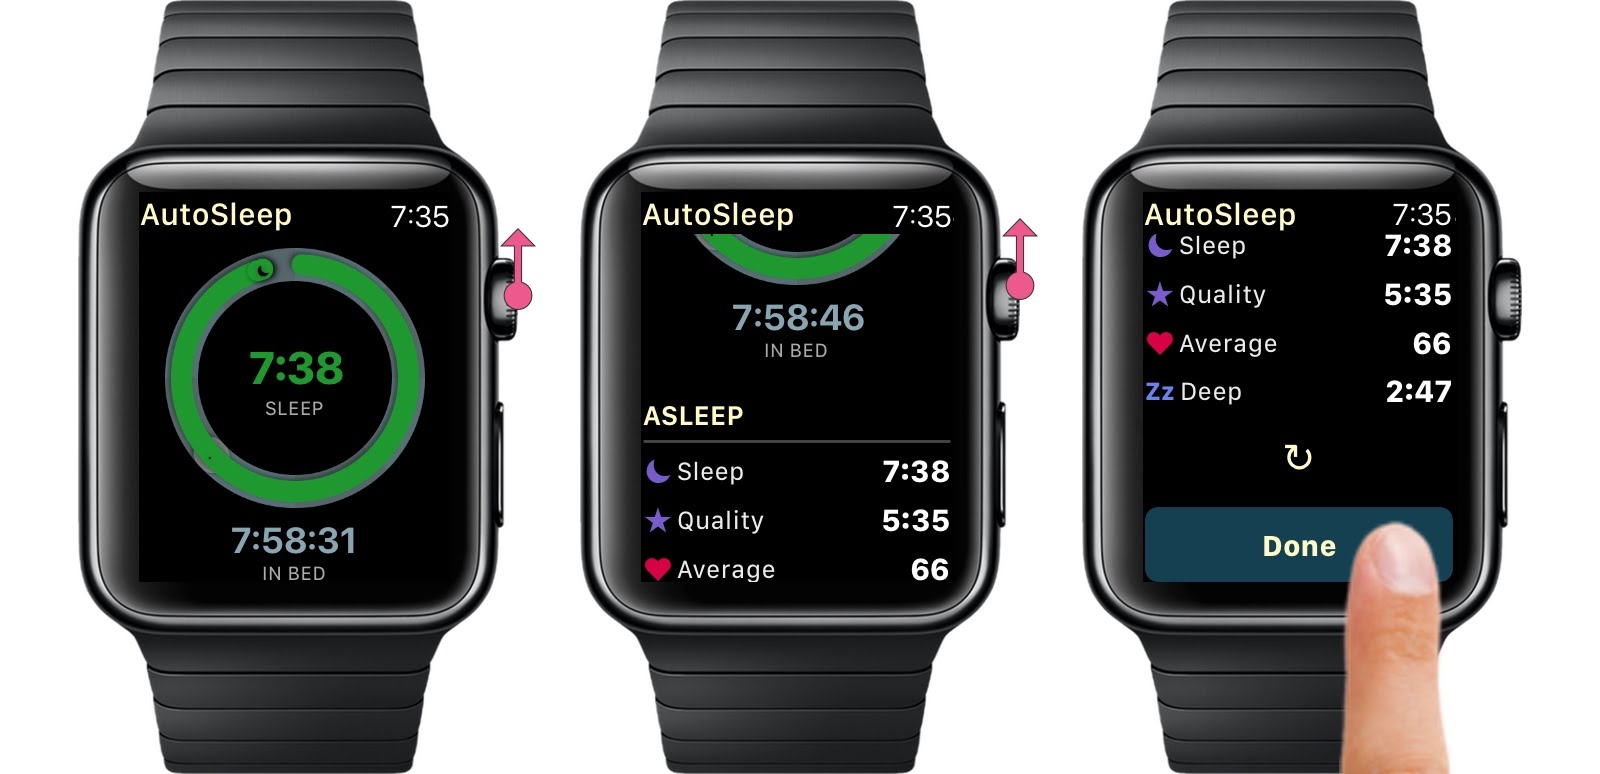 'AutoSleep 5' Brings Live Sleep Tracking to Apple Watch and iPhone X